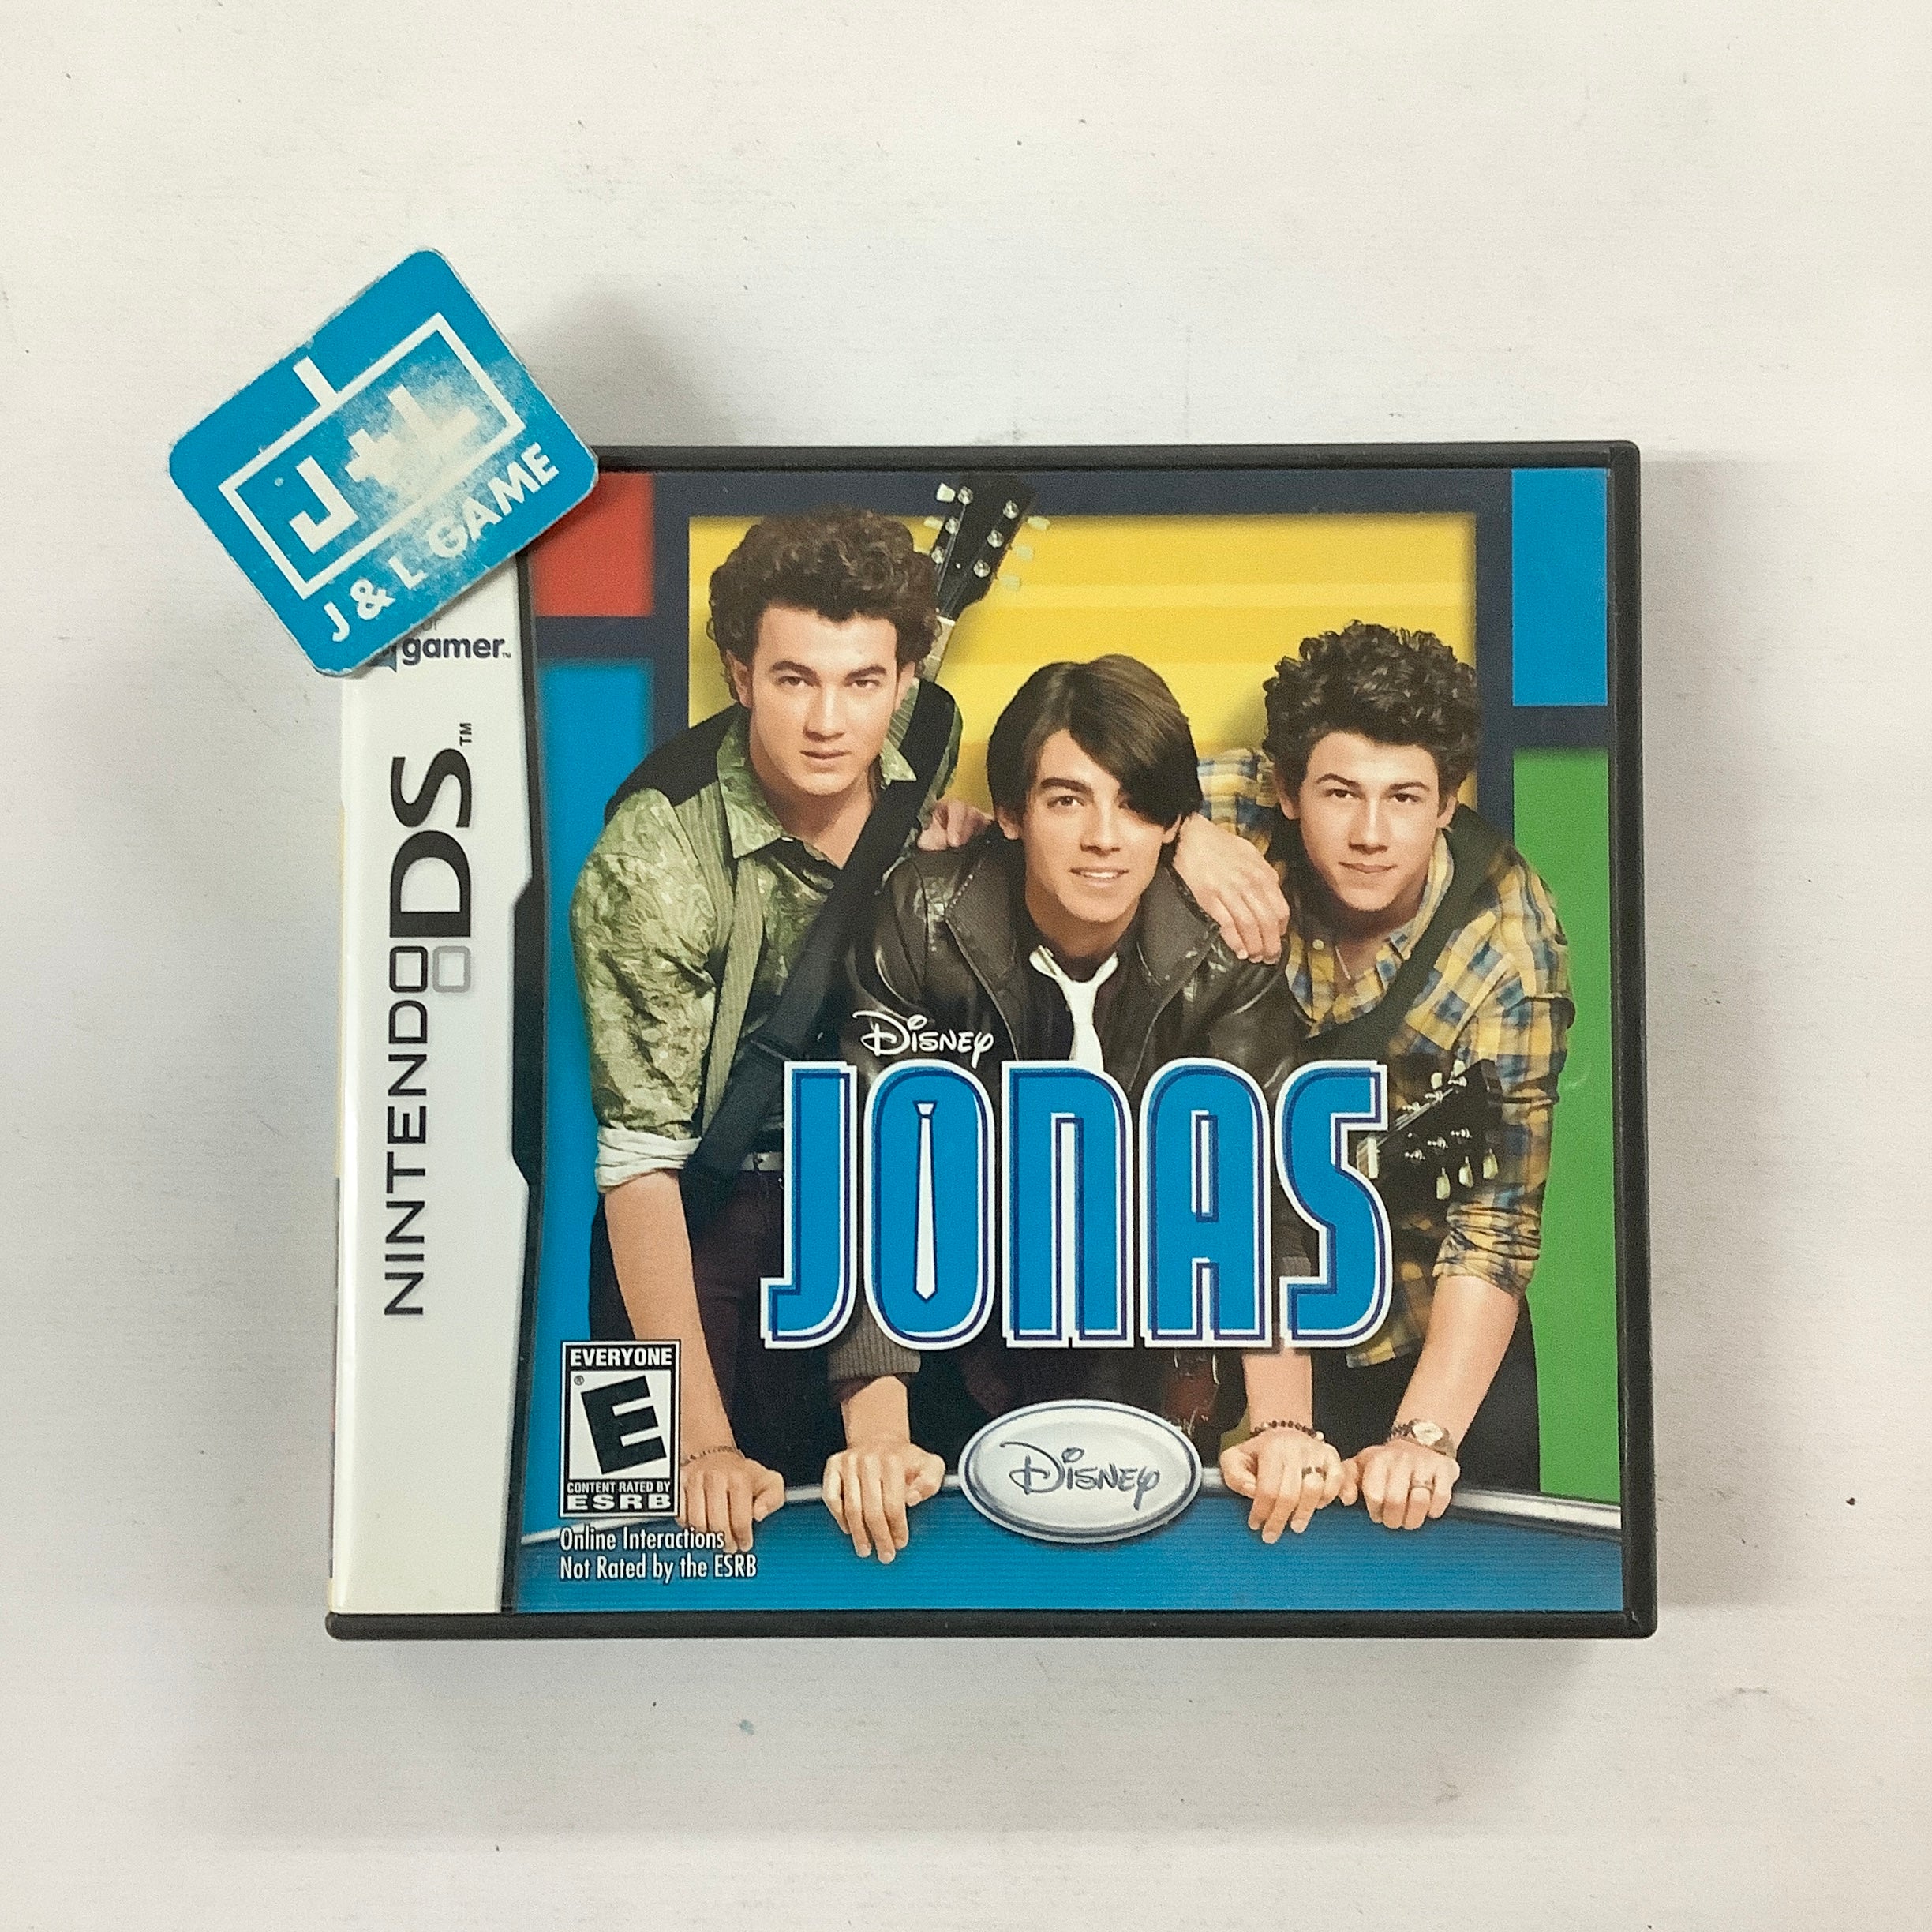 Disney Jonas - (NDS) Nintendo DS [Pre-Owned] Video Games Disney Interactive Studios   